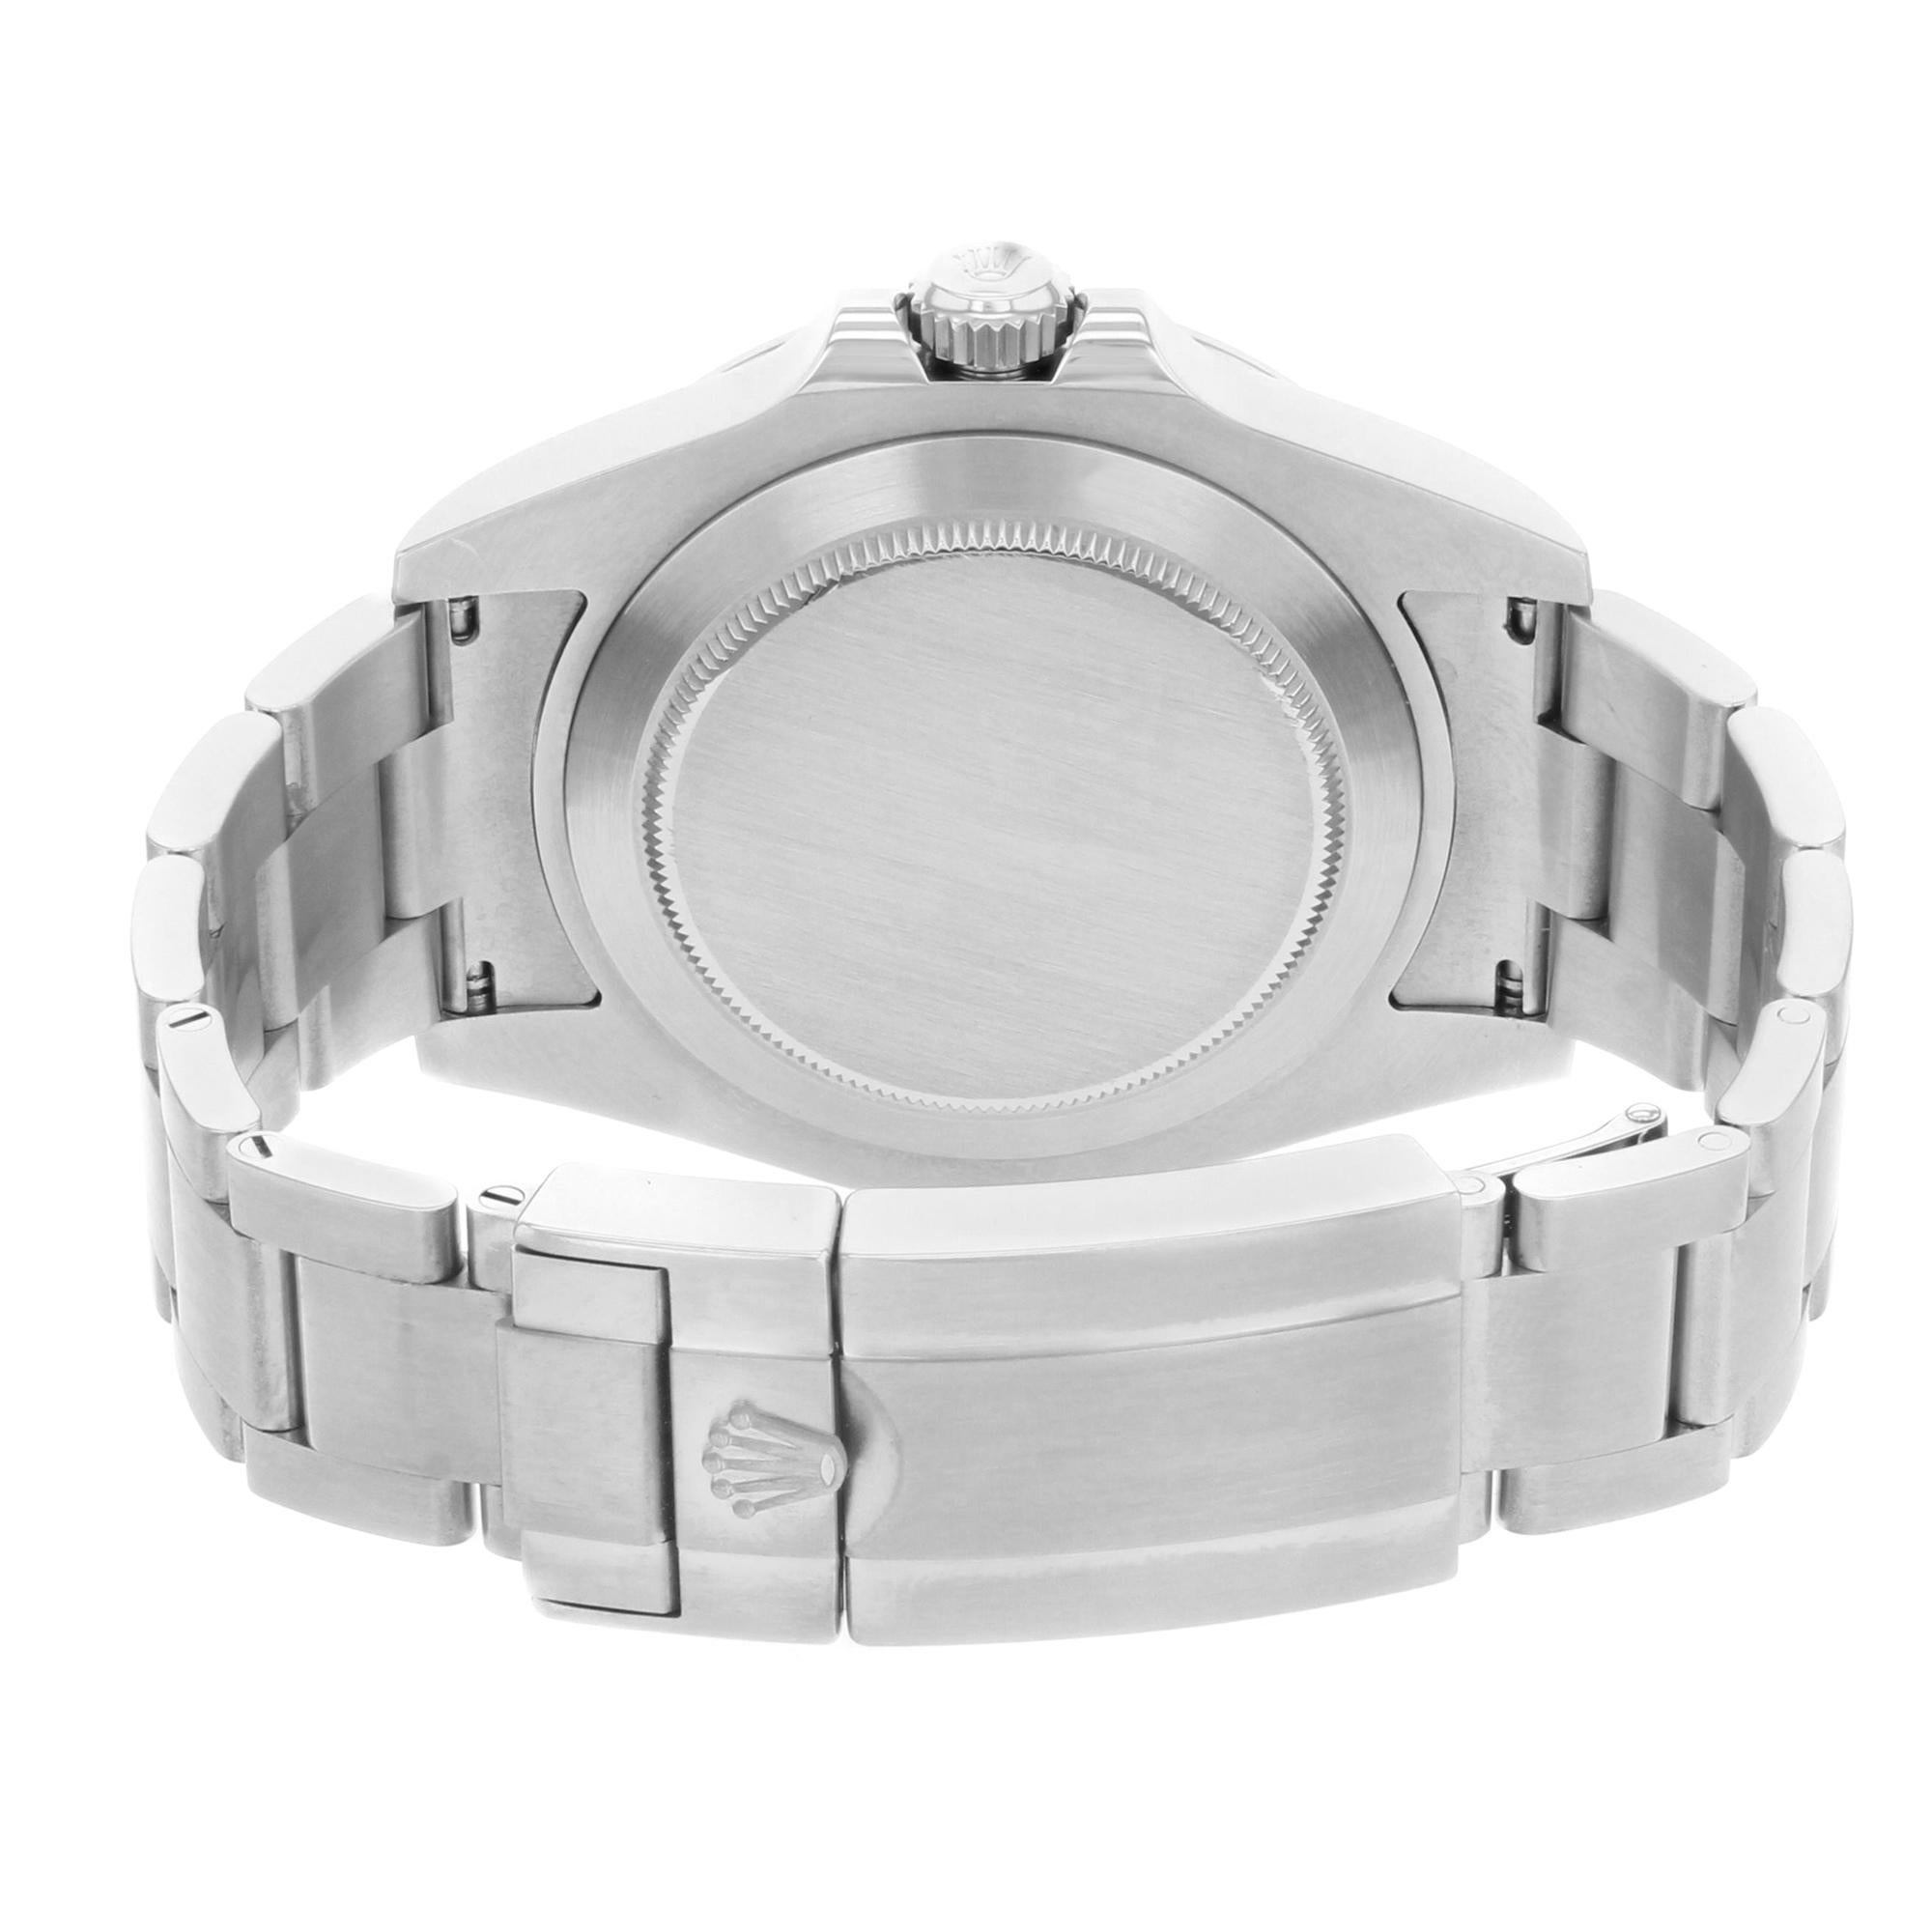 Rolex Explorer II 216570 BKSO Black Dial GMT Steel Automatic Men's Watch 2